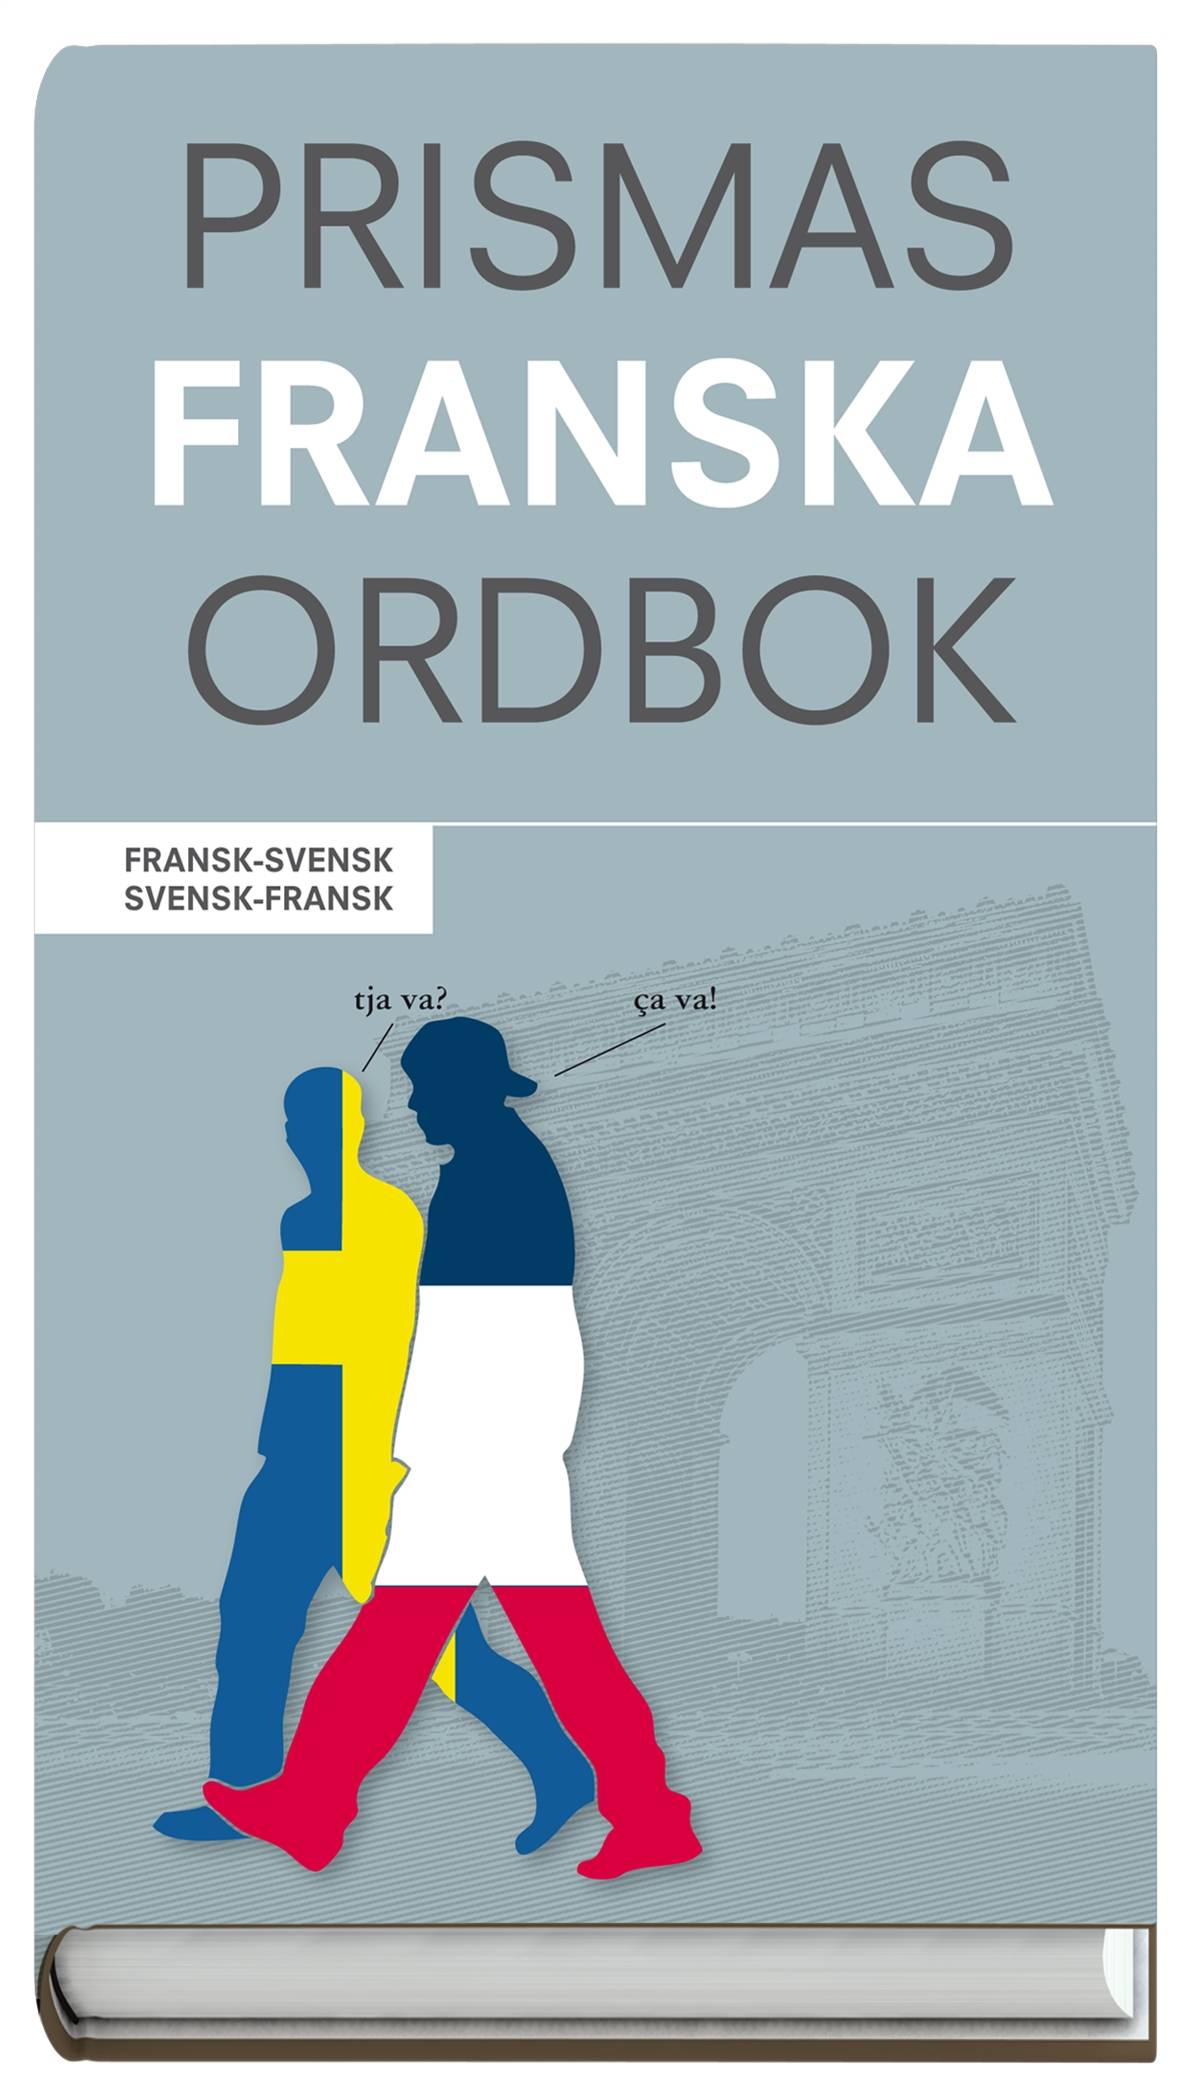 Prismas franska ordbok : fransk-svensk/svensk-fransk